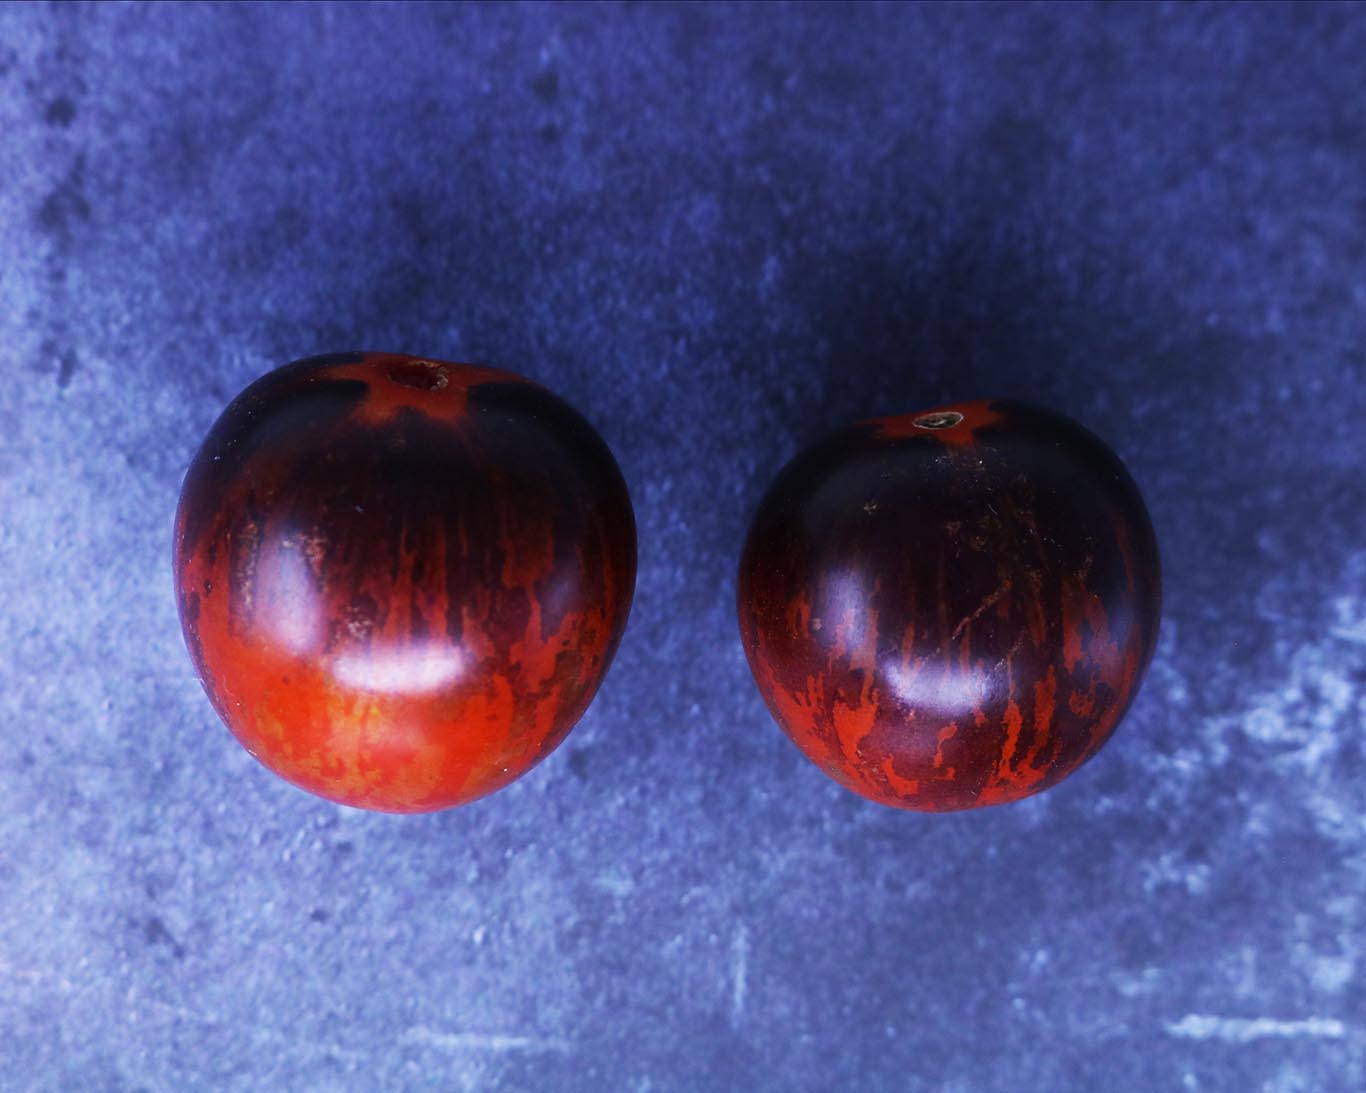 Tomato: Kaleidoscopic Jewel